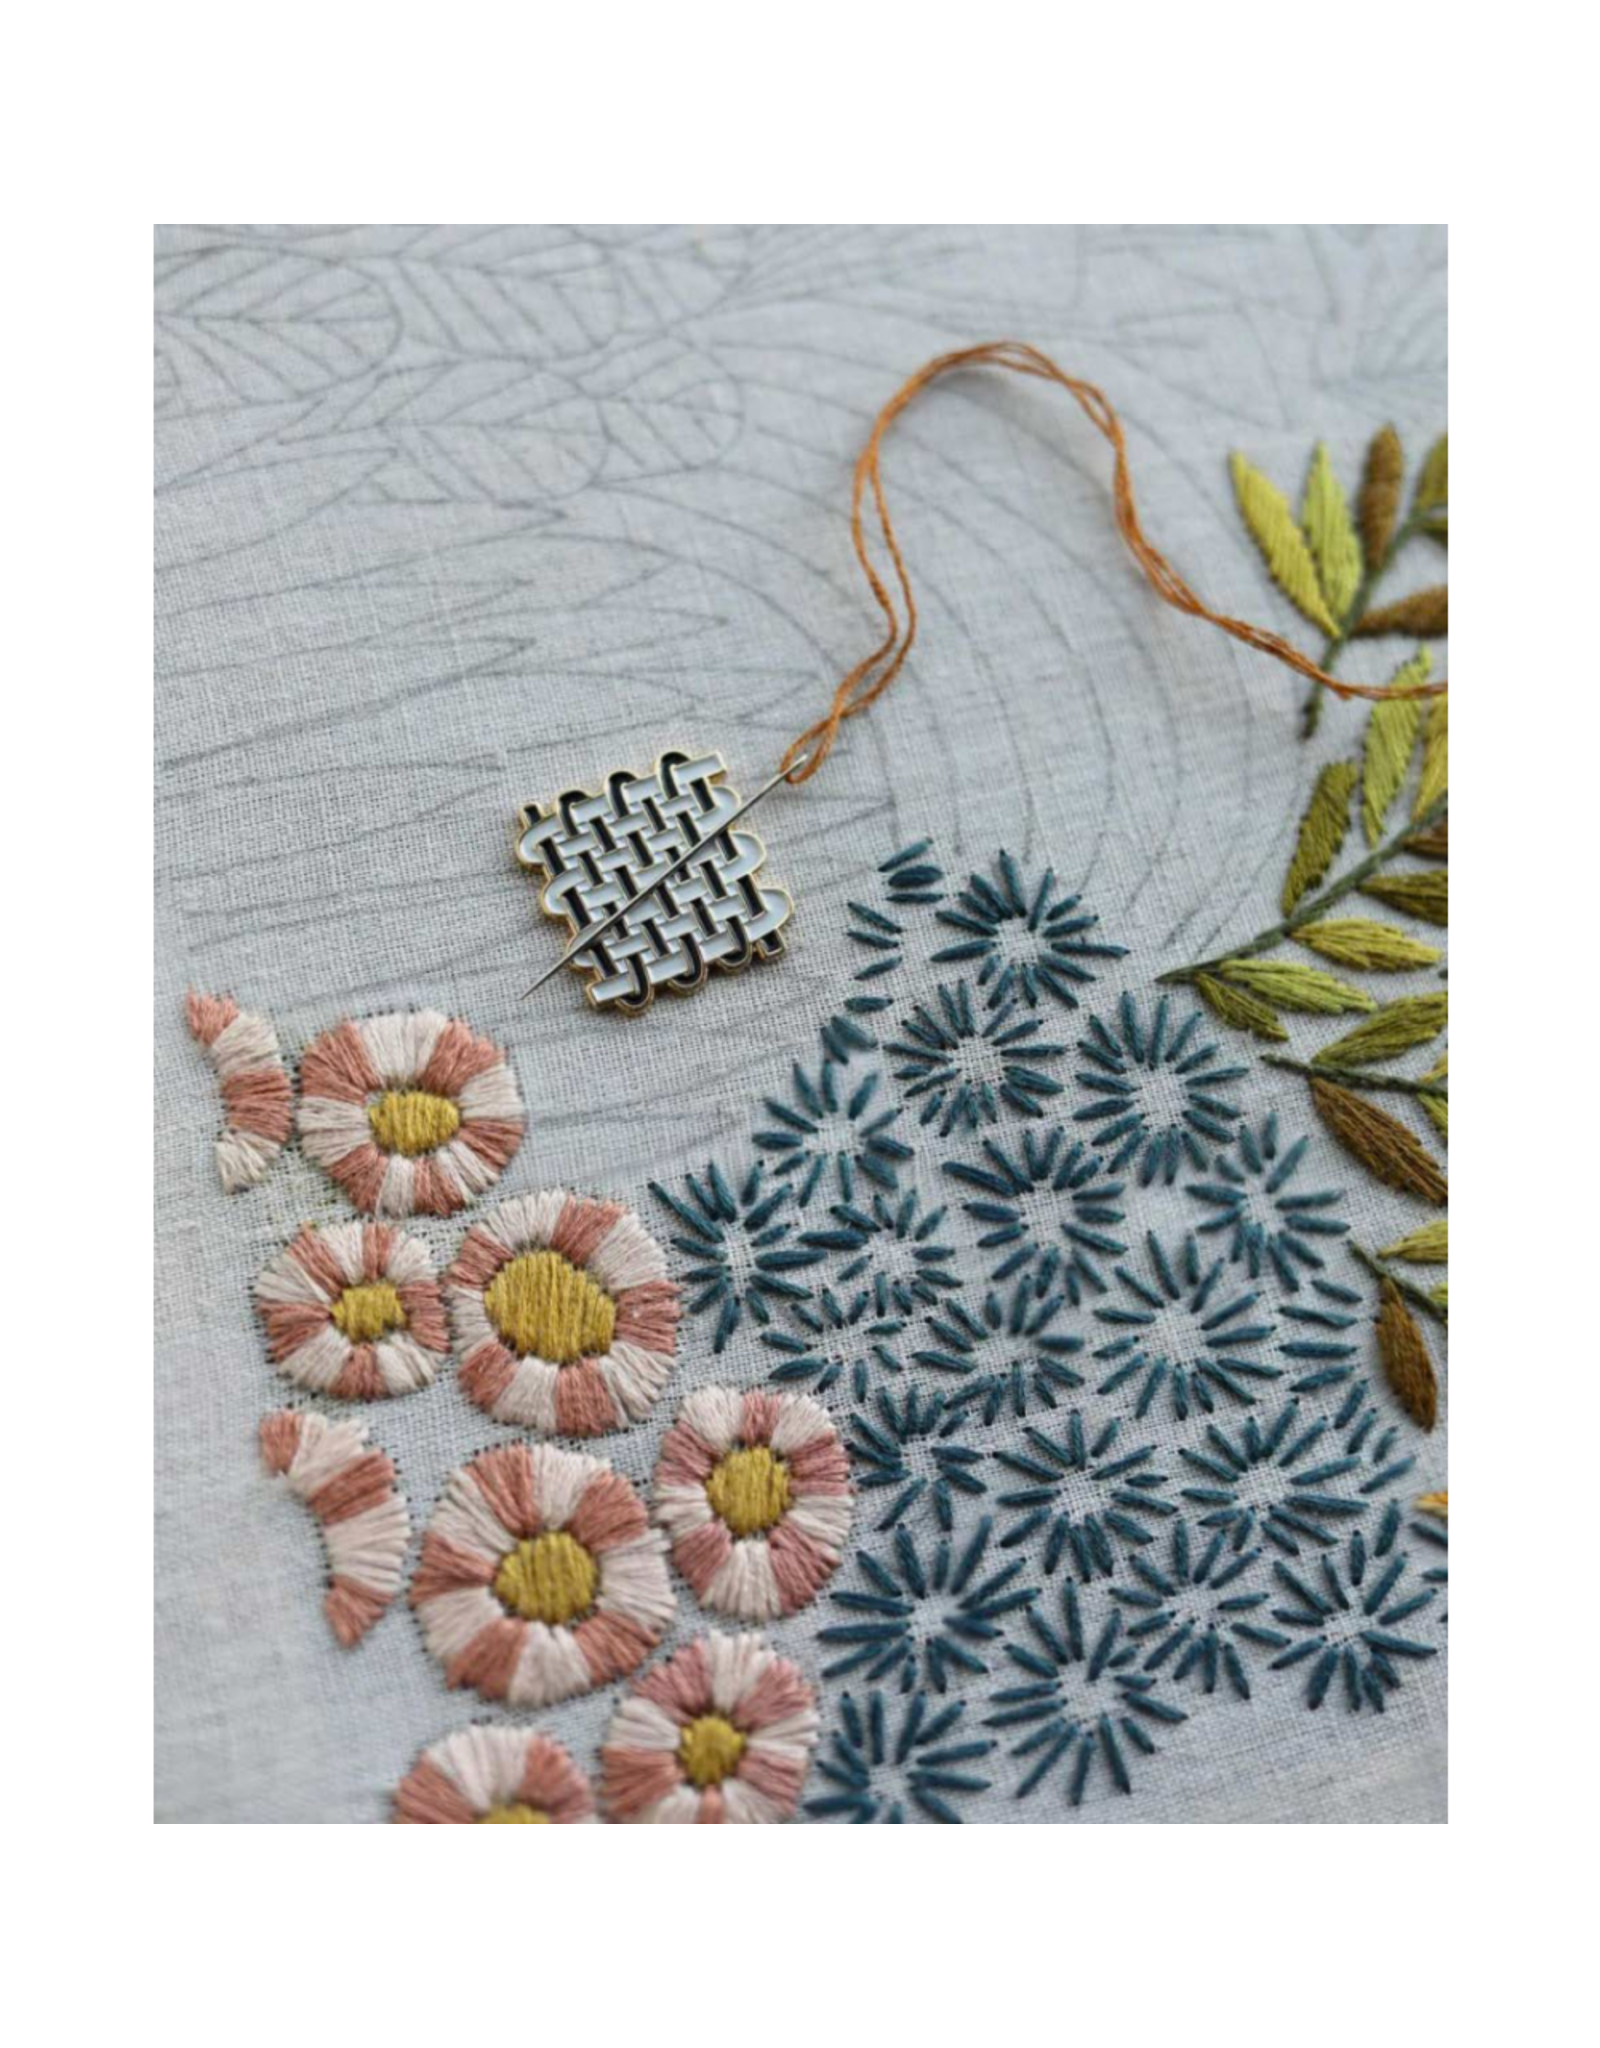 Arounna Khounnoraj Embroidery: A Modern Guide to Botanical Embroidery